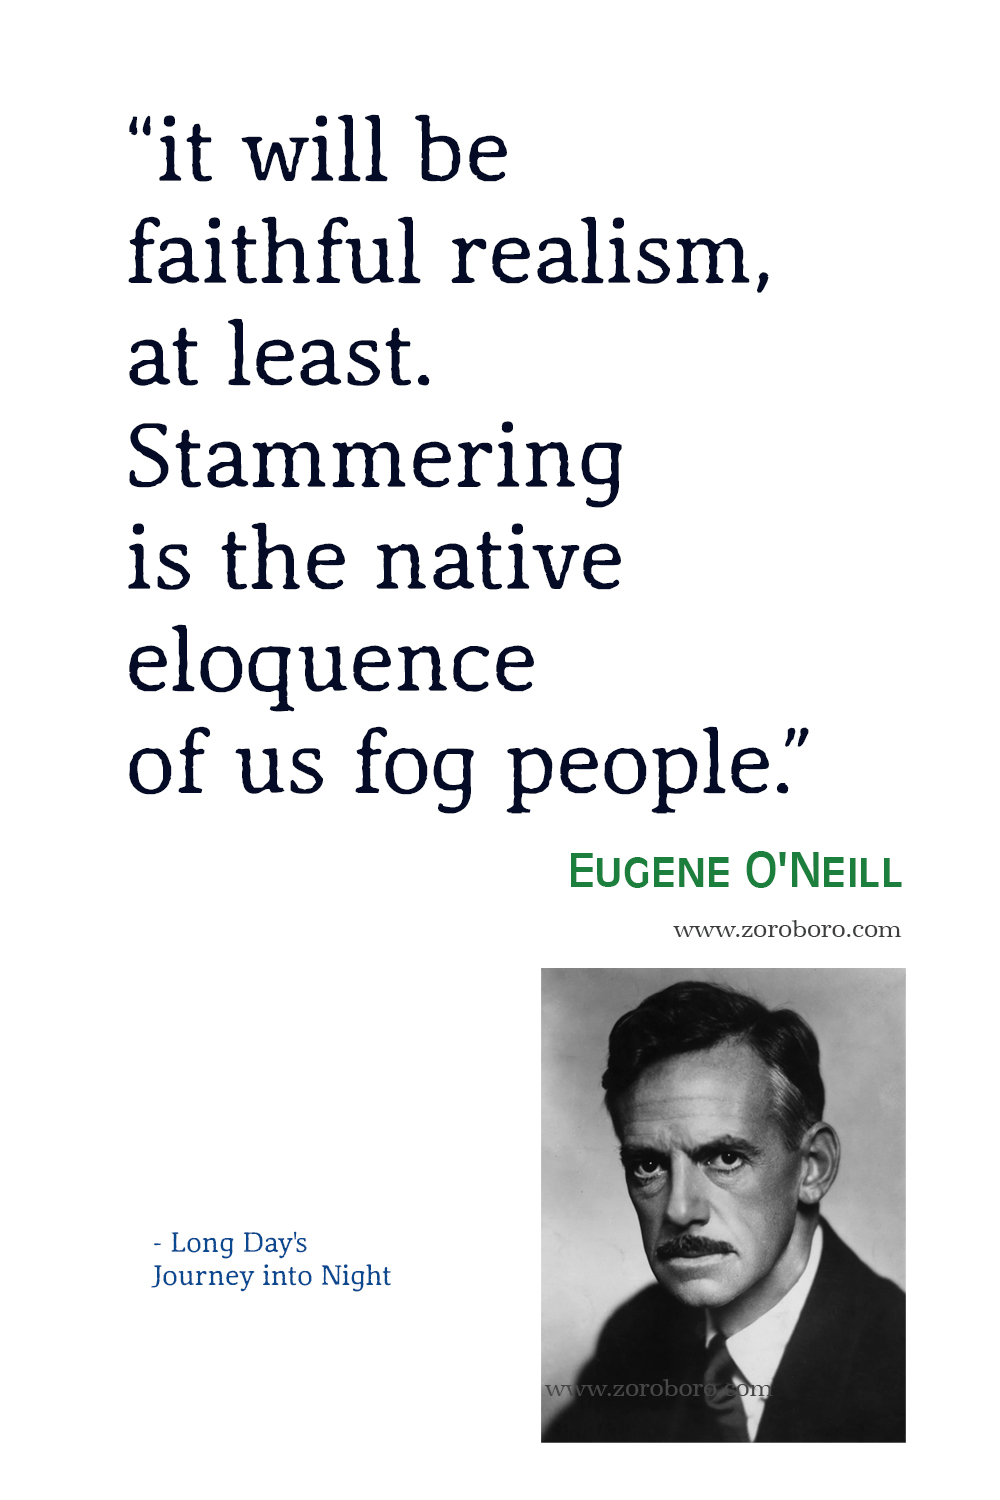 Eugene O'Neill Quotes, Eugene O'Neill Long Day's Journey into Night Quotes, Eugene O'Neill Books Quotes, Eugene O'Neill Famous Quotes.